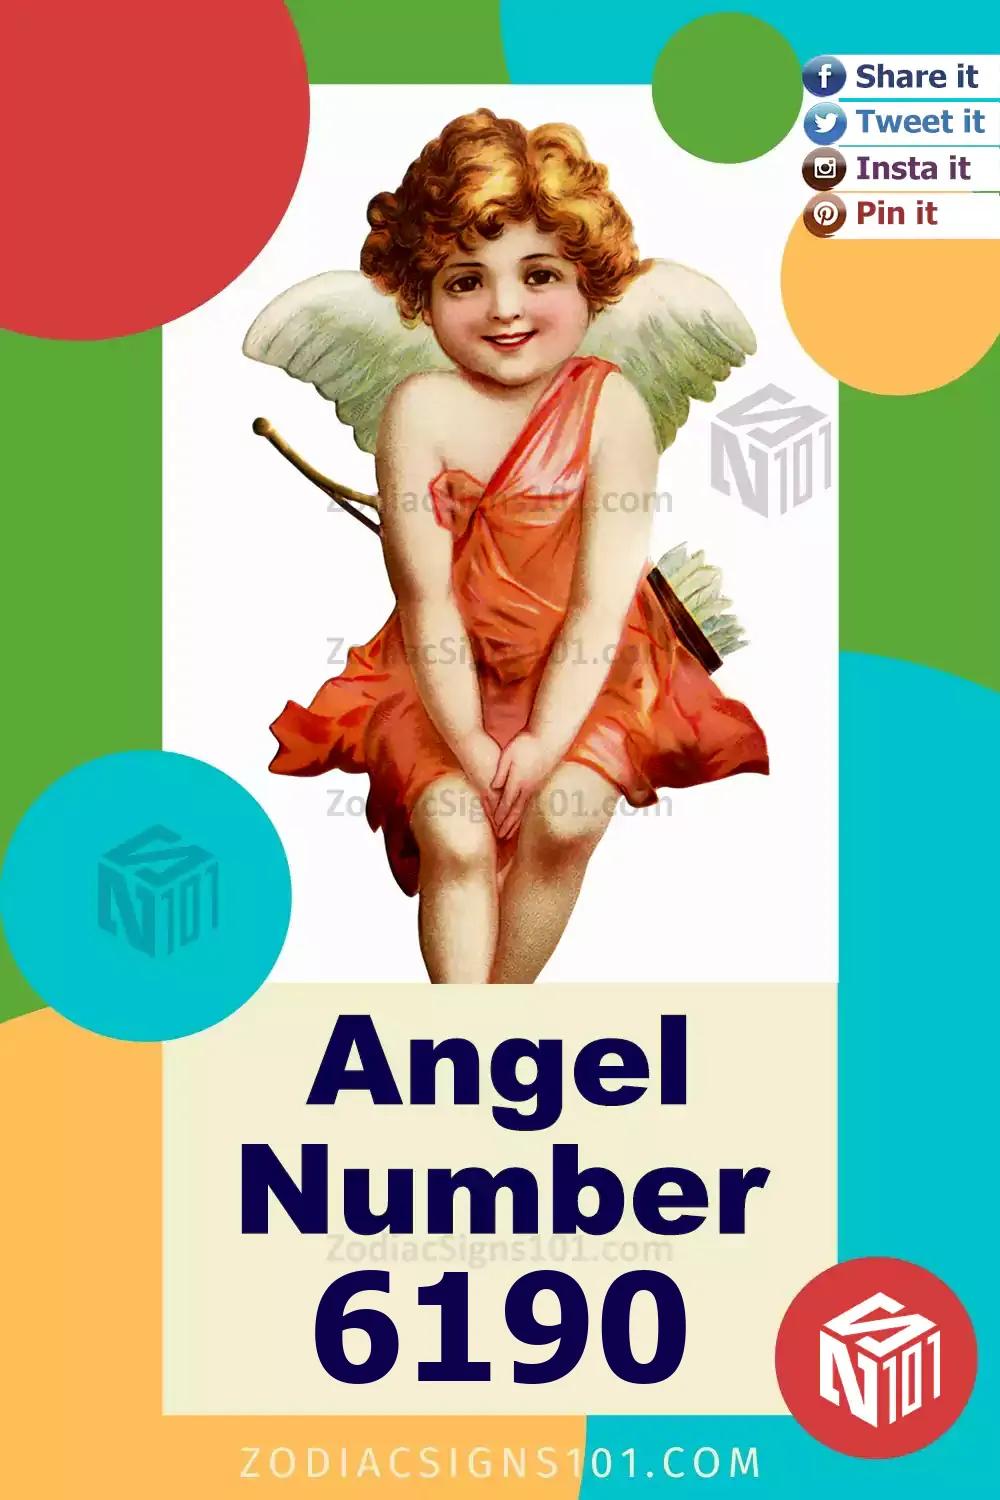 6190-Angel-Number-Meaning.jpg